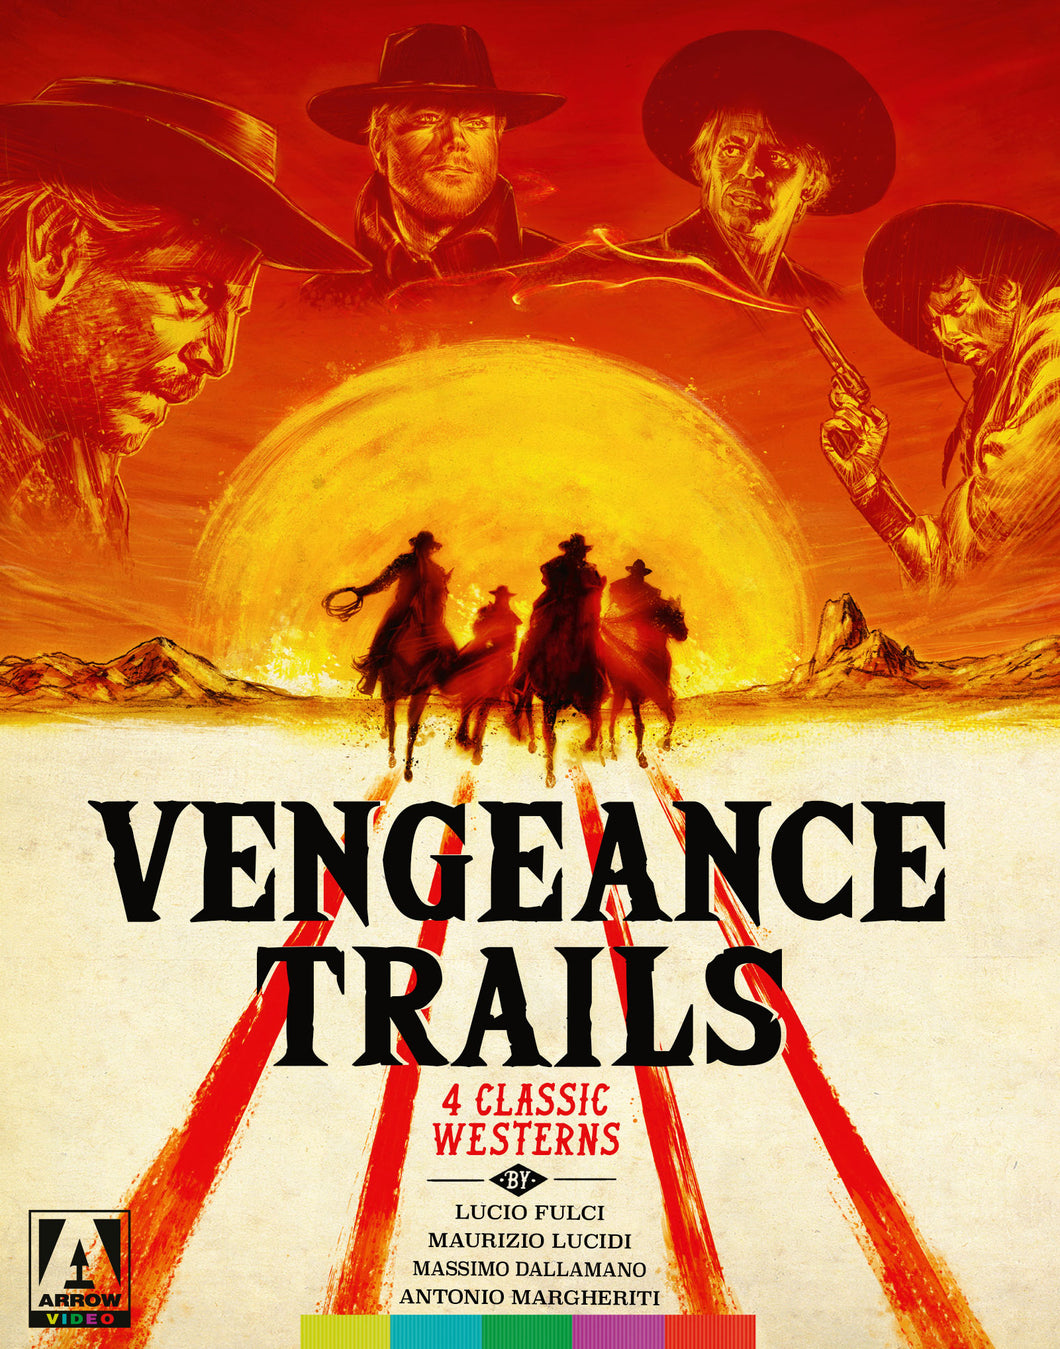 Vengeance Trails: Four Western Classics [Standard Edition] (Blu-ray)